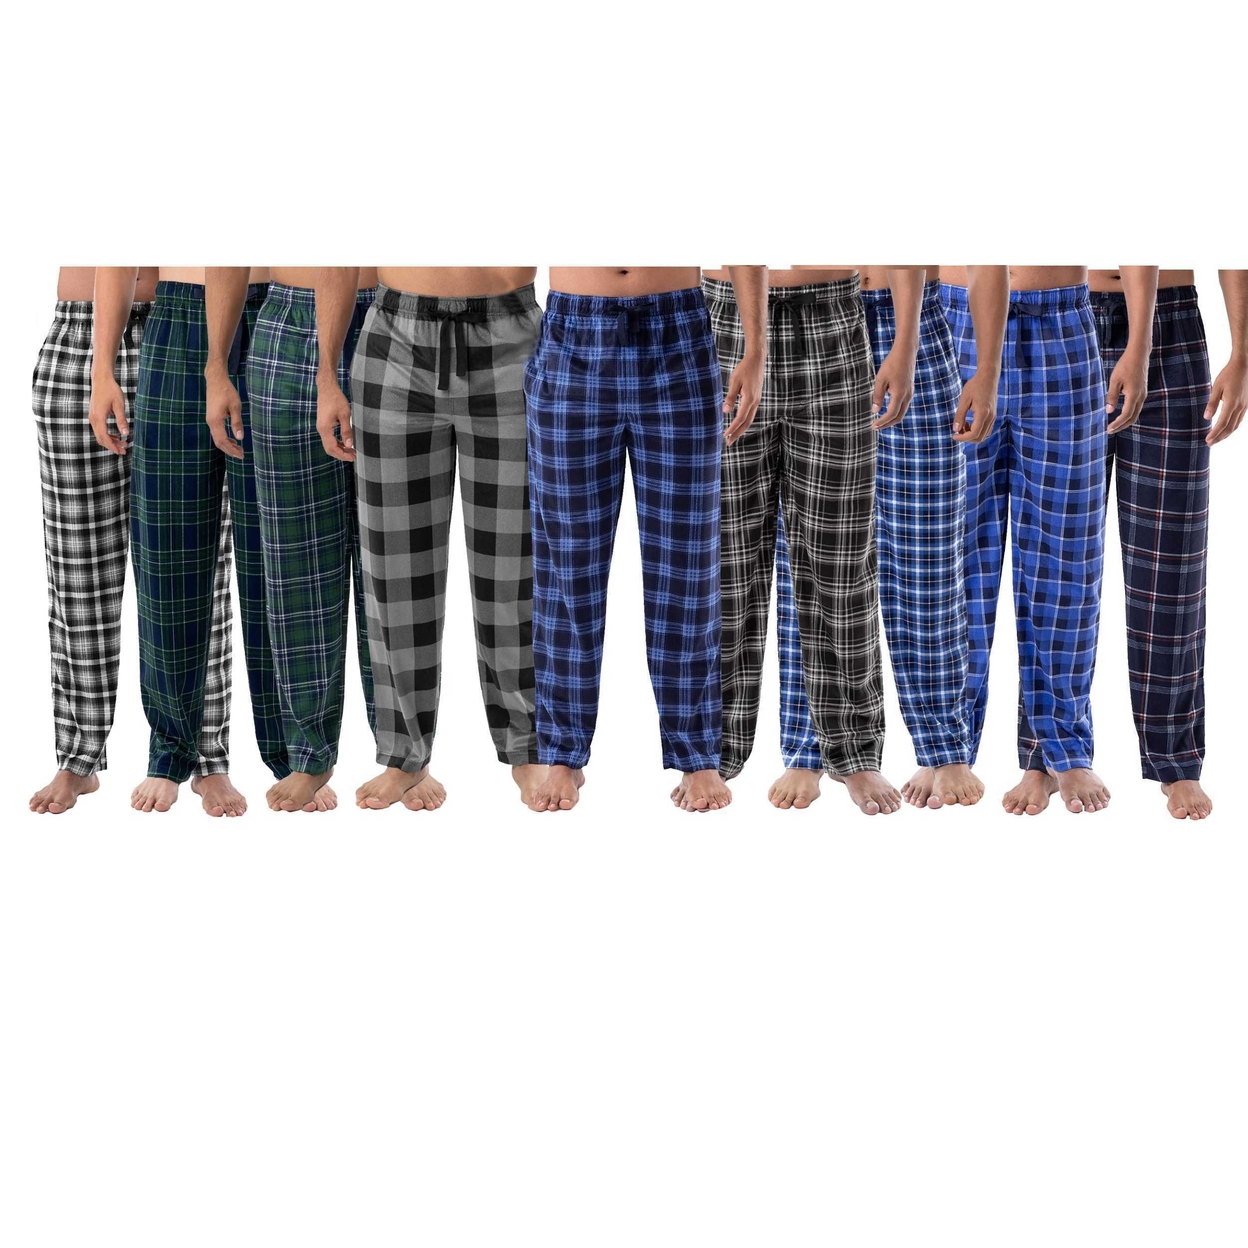 3-Pack: Men's Ultra-Soft Cozy Lounge Sleep Micro Fleece Plaid Pajama Pants - Medium